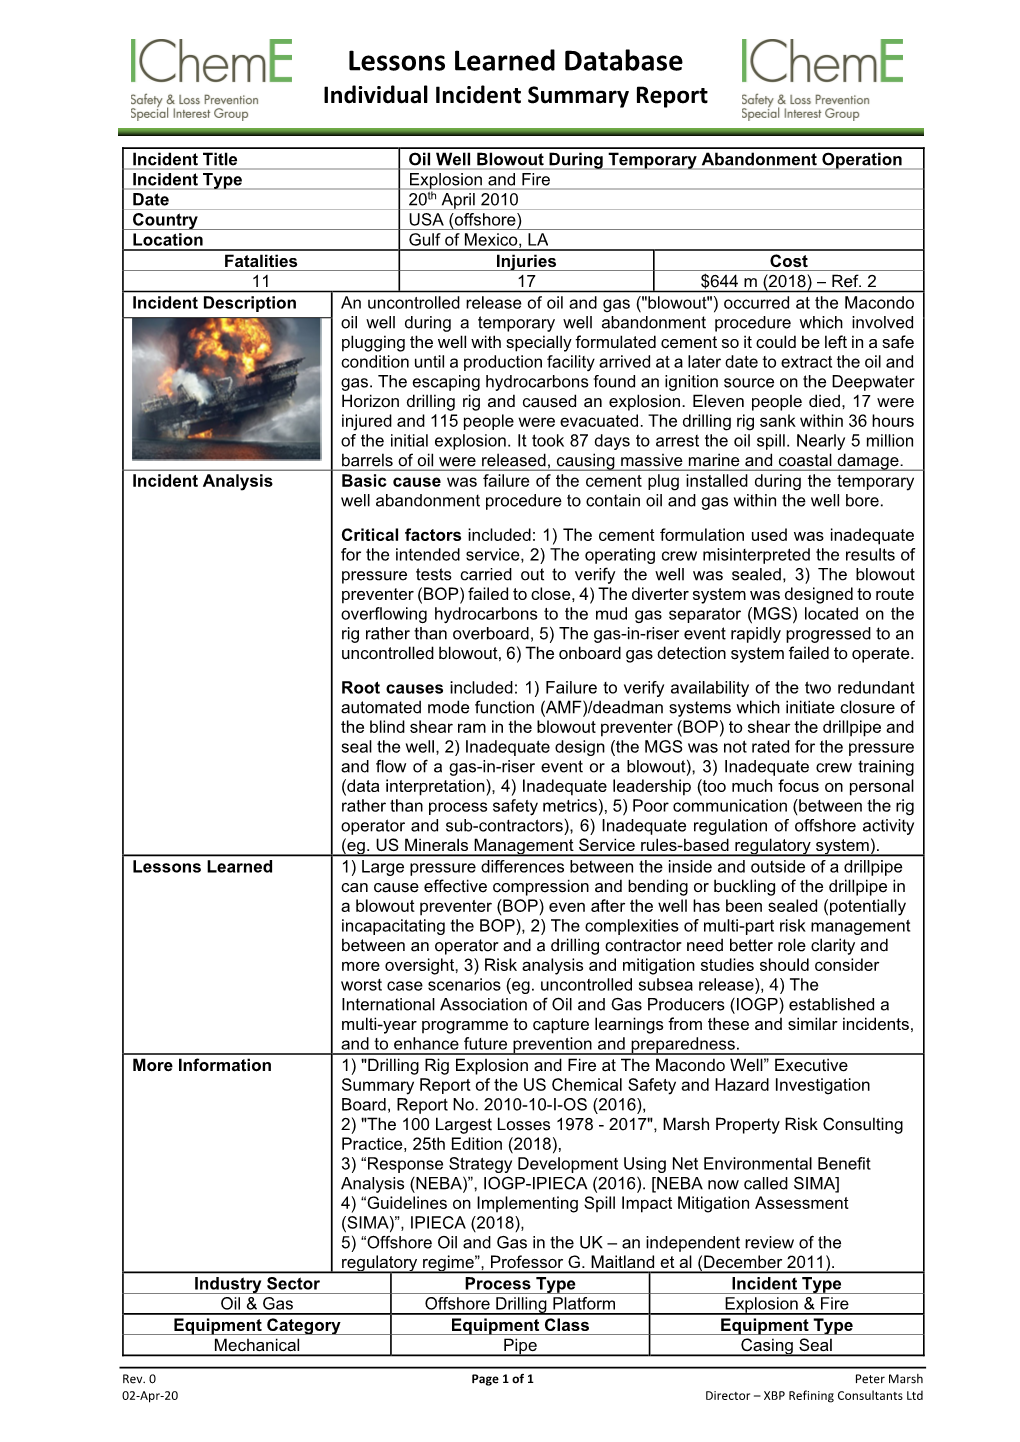 Macondo (Deepwater Horizon) Incident Summary (20-Apr-10)